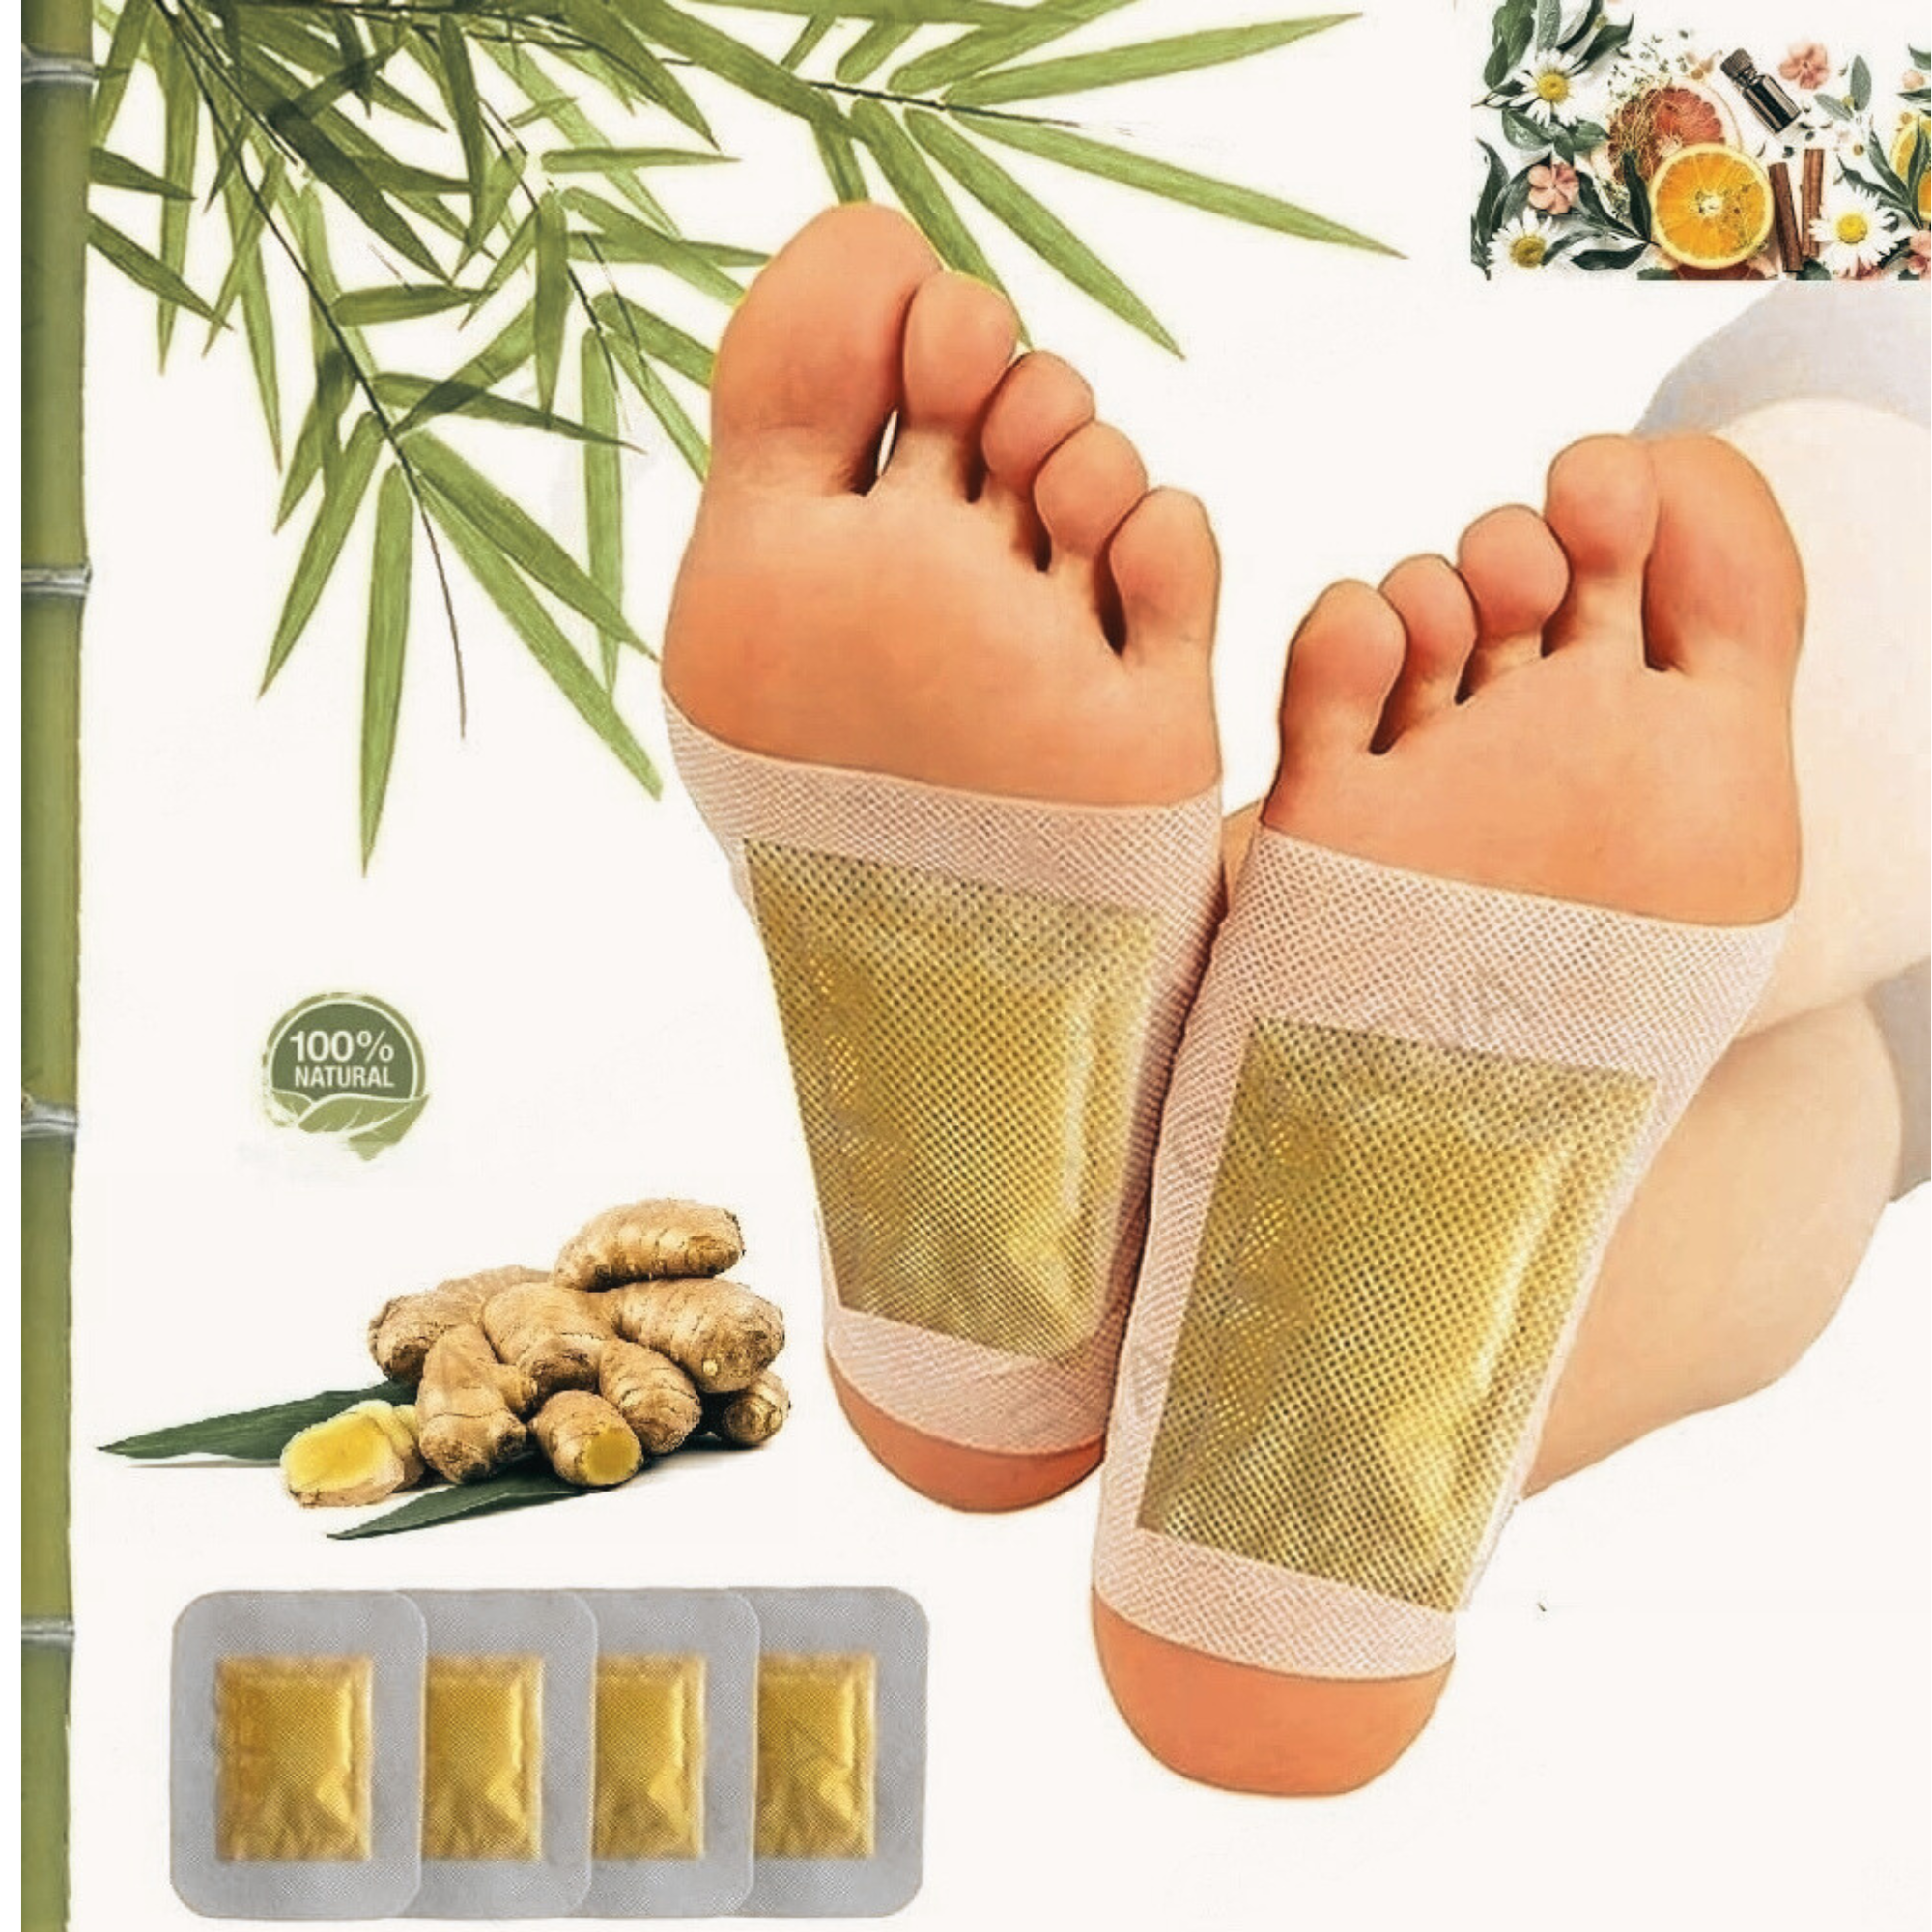 Tatsumi Herbal Detox Foot Patches